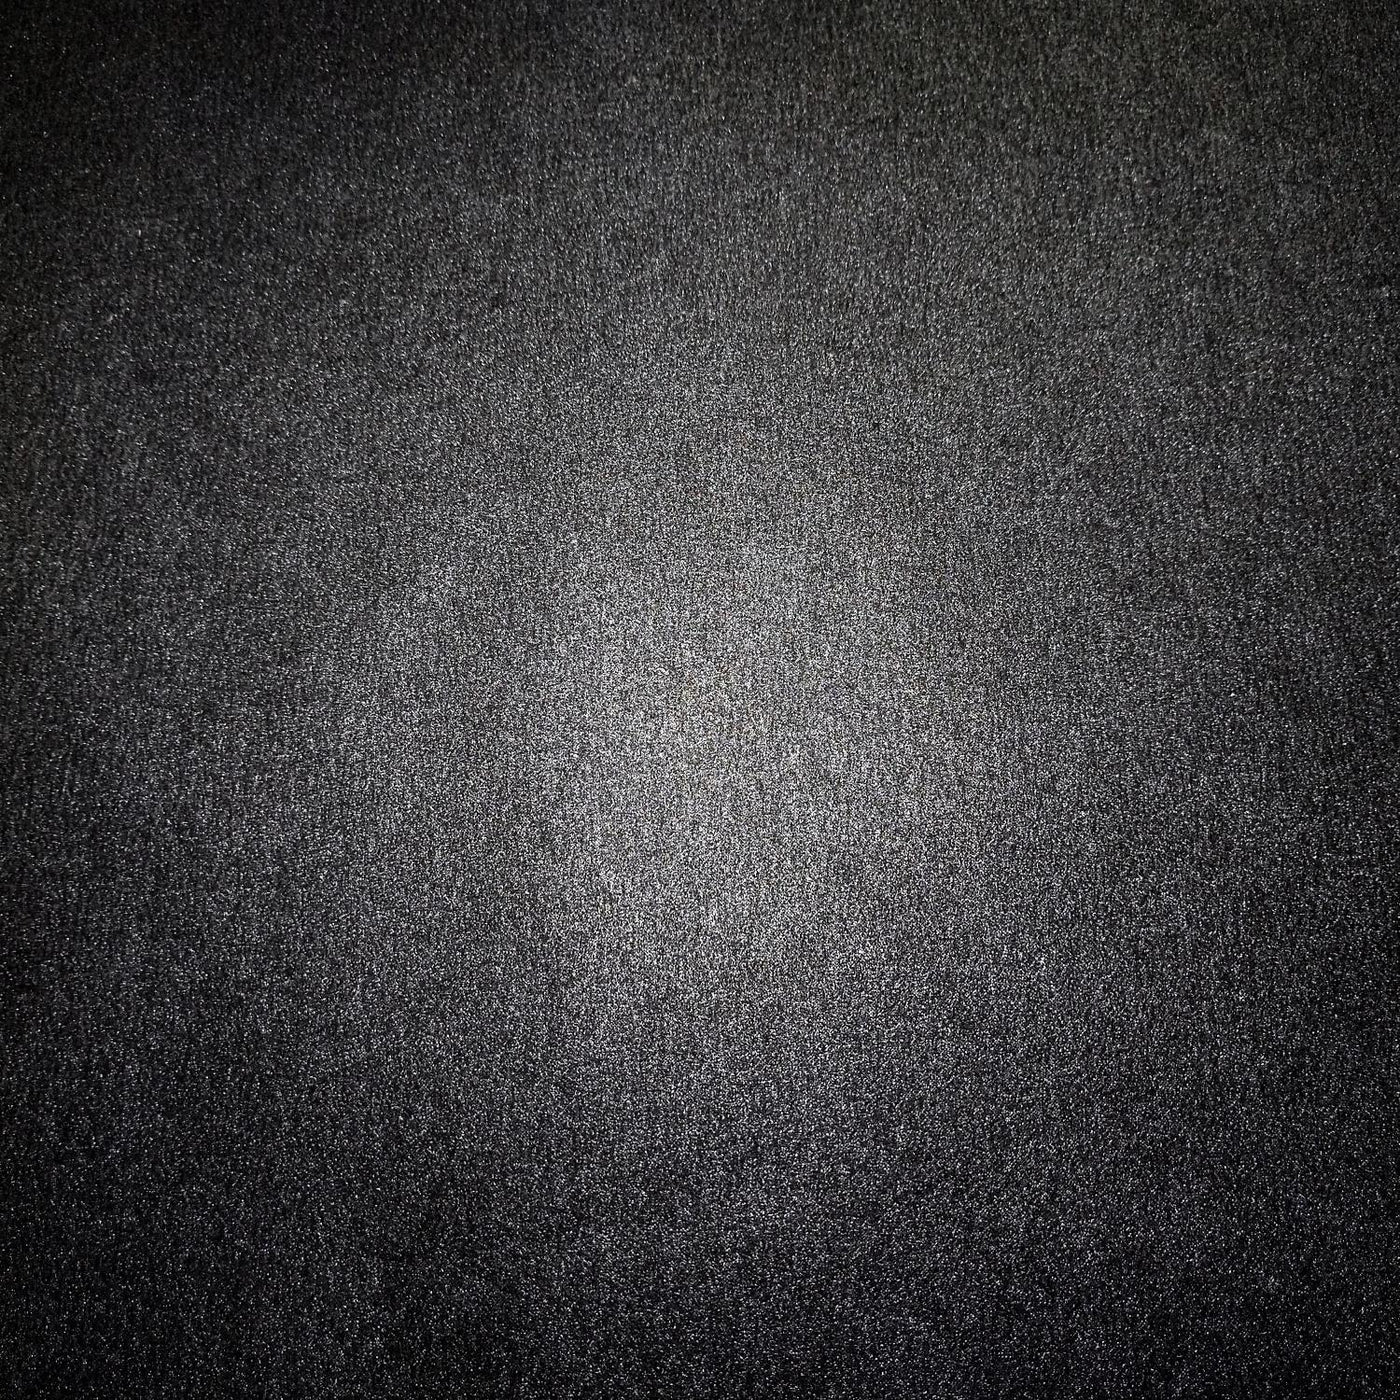 Gleaming Metallic Kozo Mulberry Paper (Black)